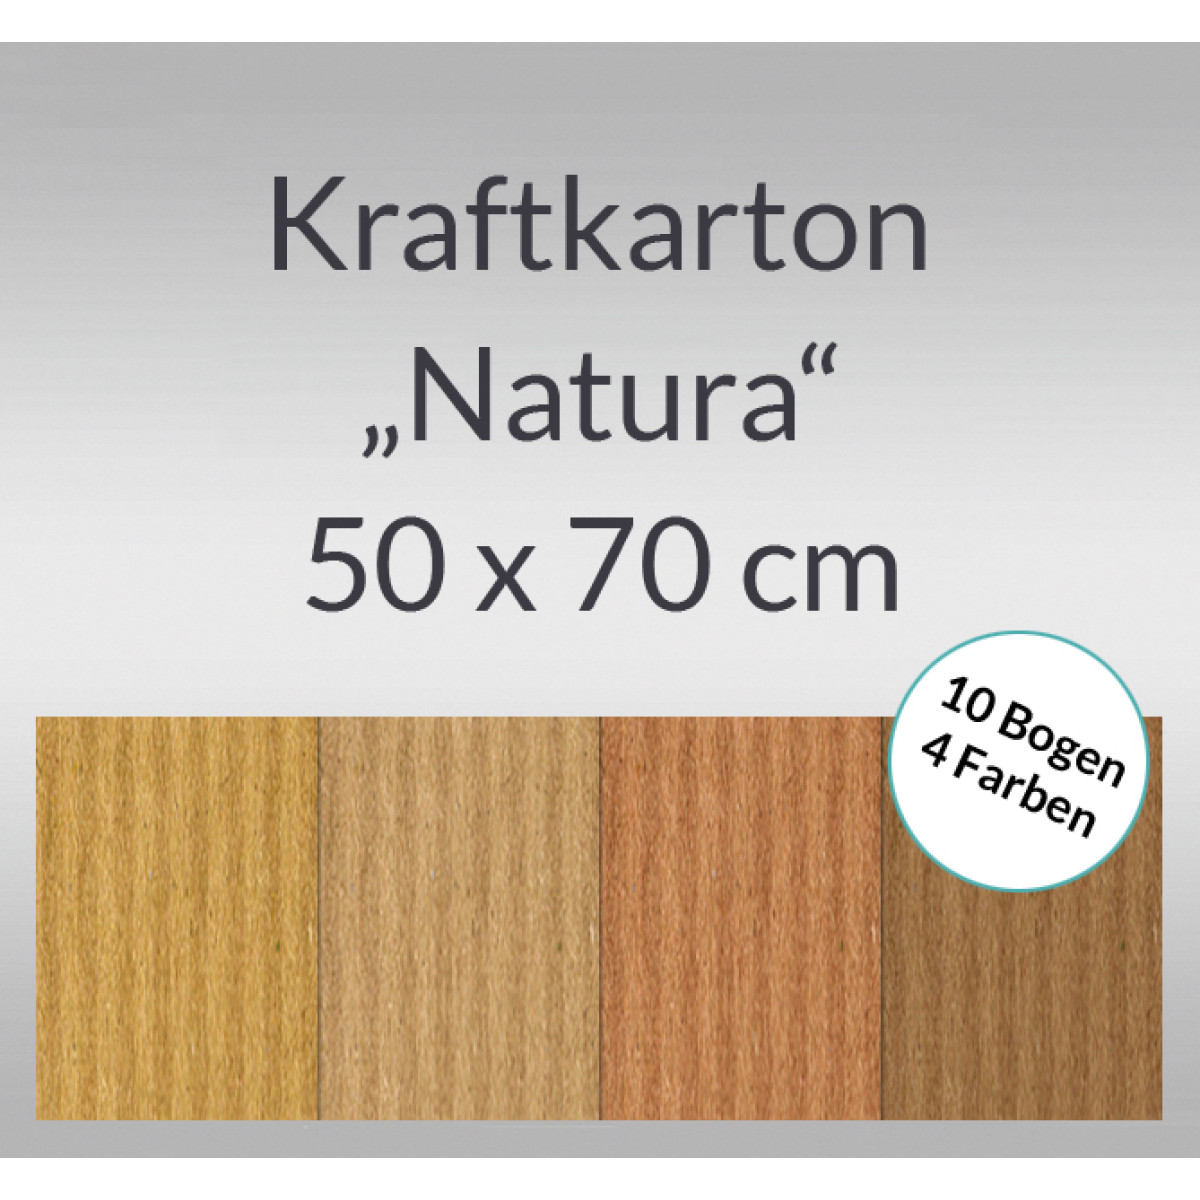 Kraftkarton "Natura" 50 x 70 cm - 10 Bogen sortiert